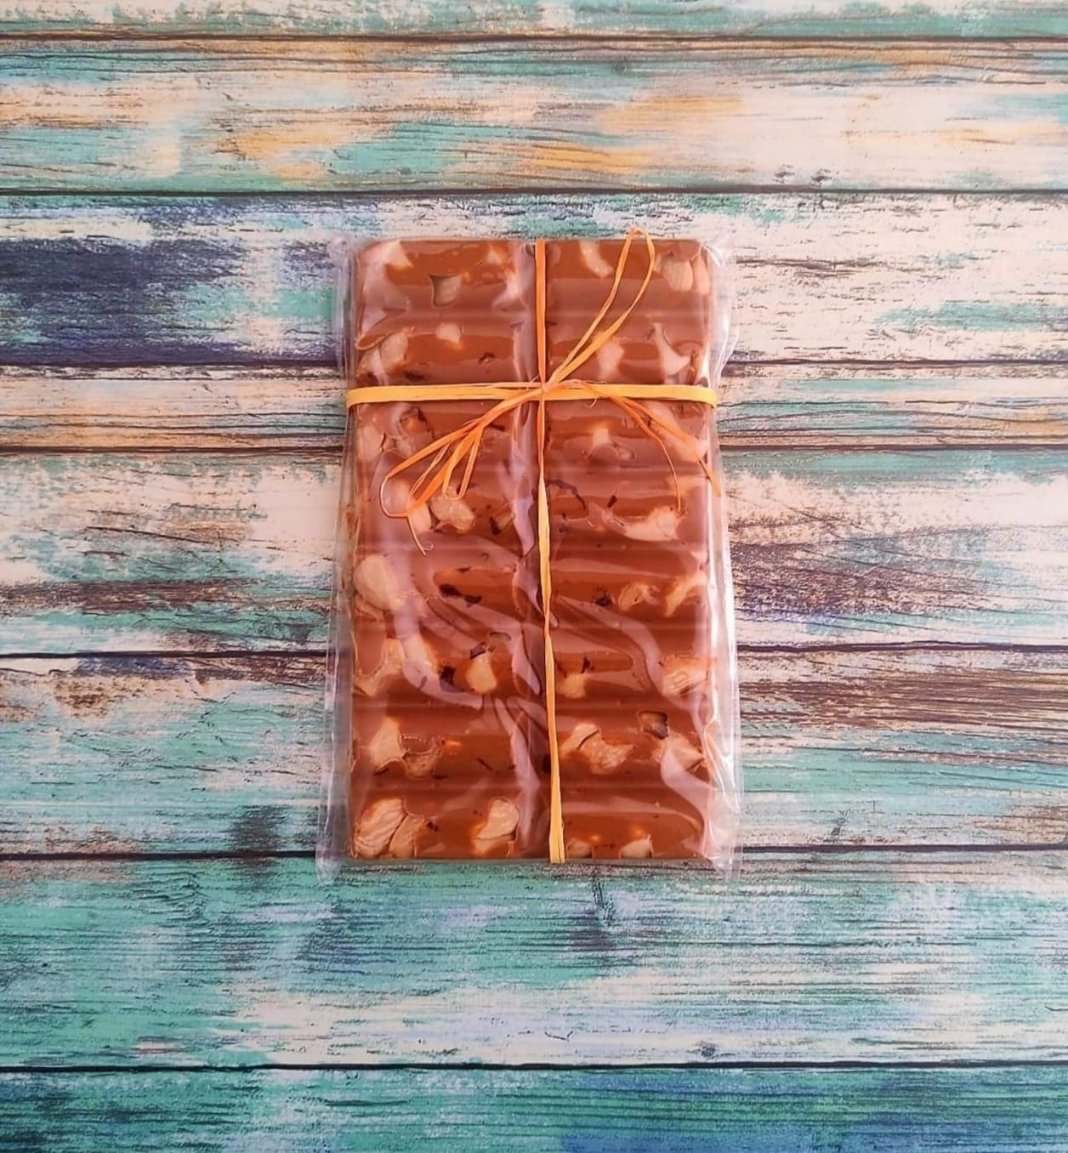 tableta-chocolate-con-leche-caramelo-y-almendras-desayuno-a-domicilio.jpg